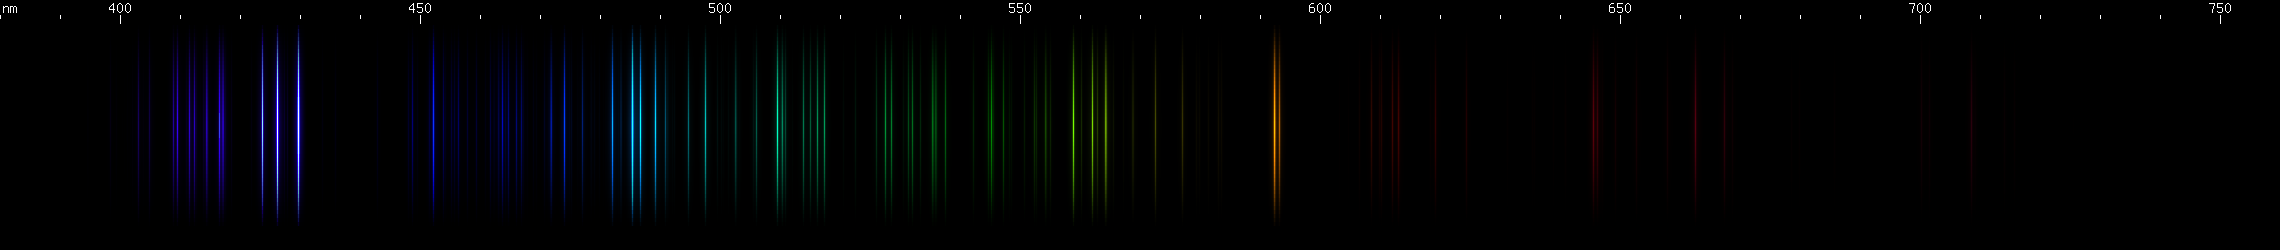 Spectral lines of Technetium.